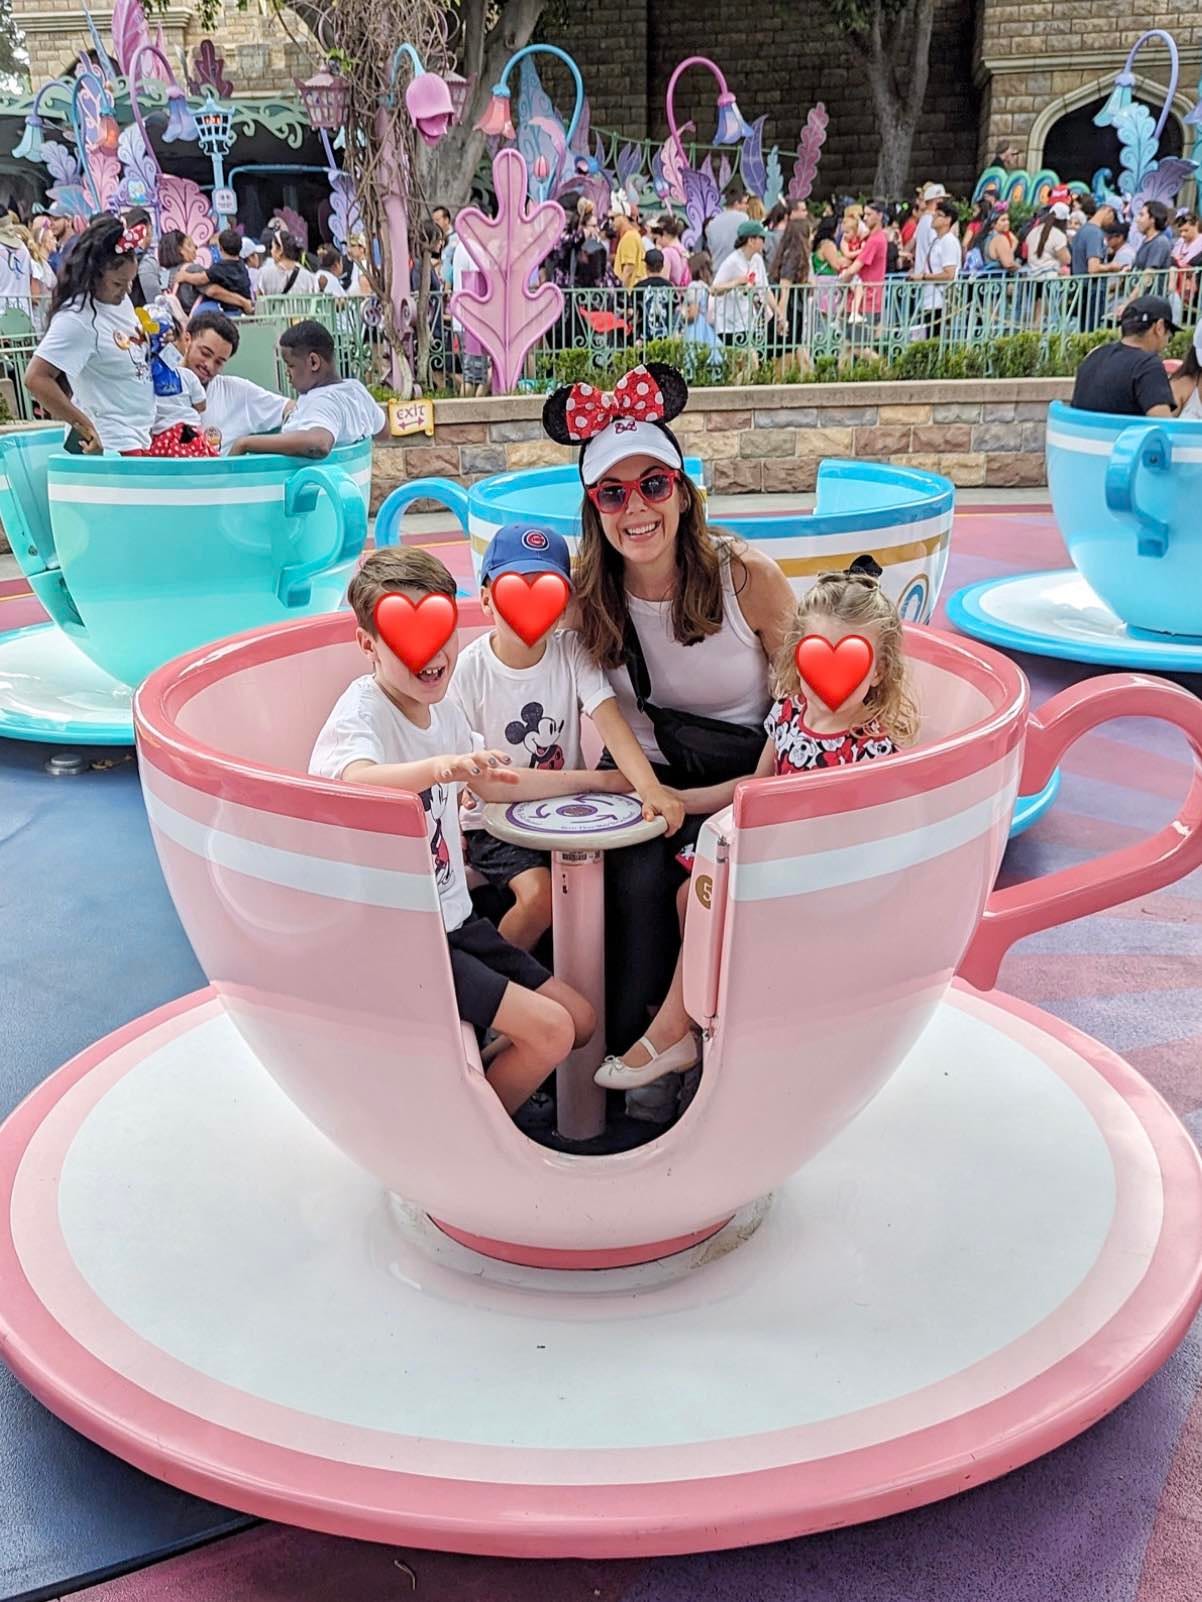 Disney Finds - Mickey & Minnie Cup Warmers